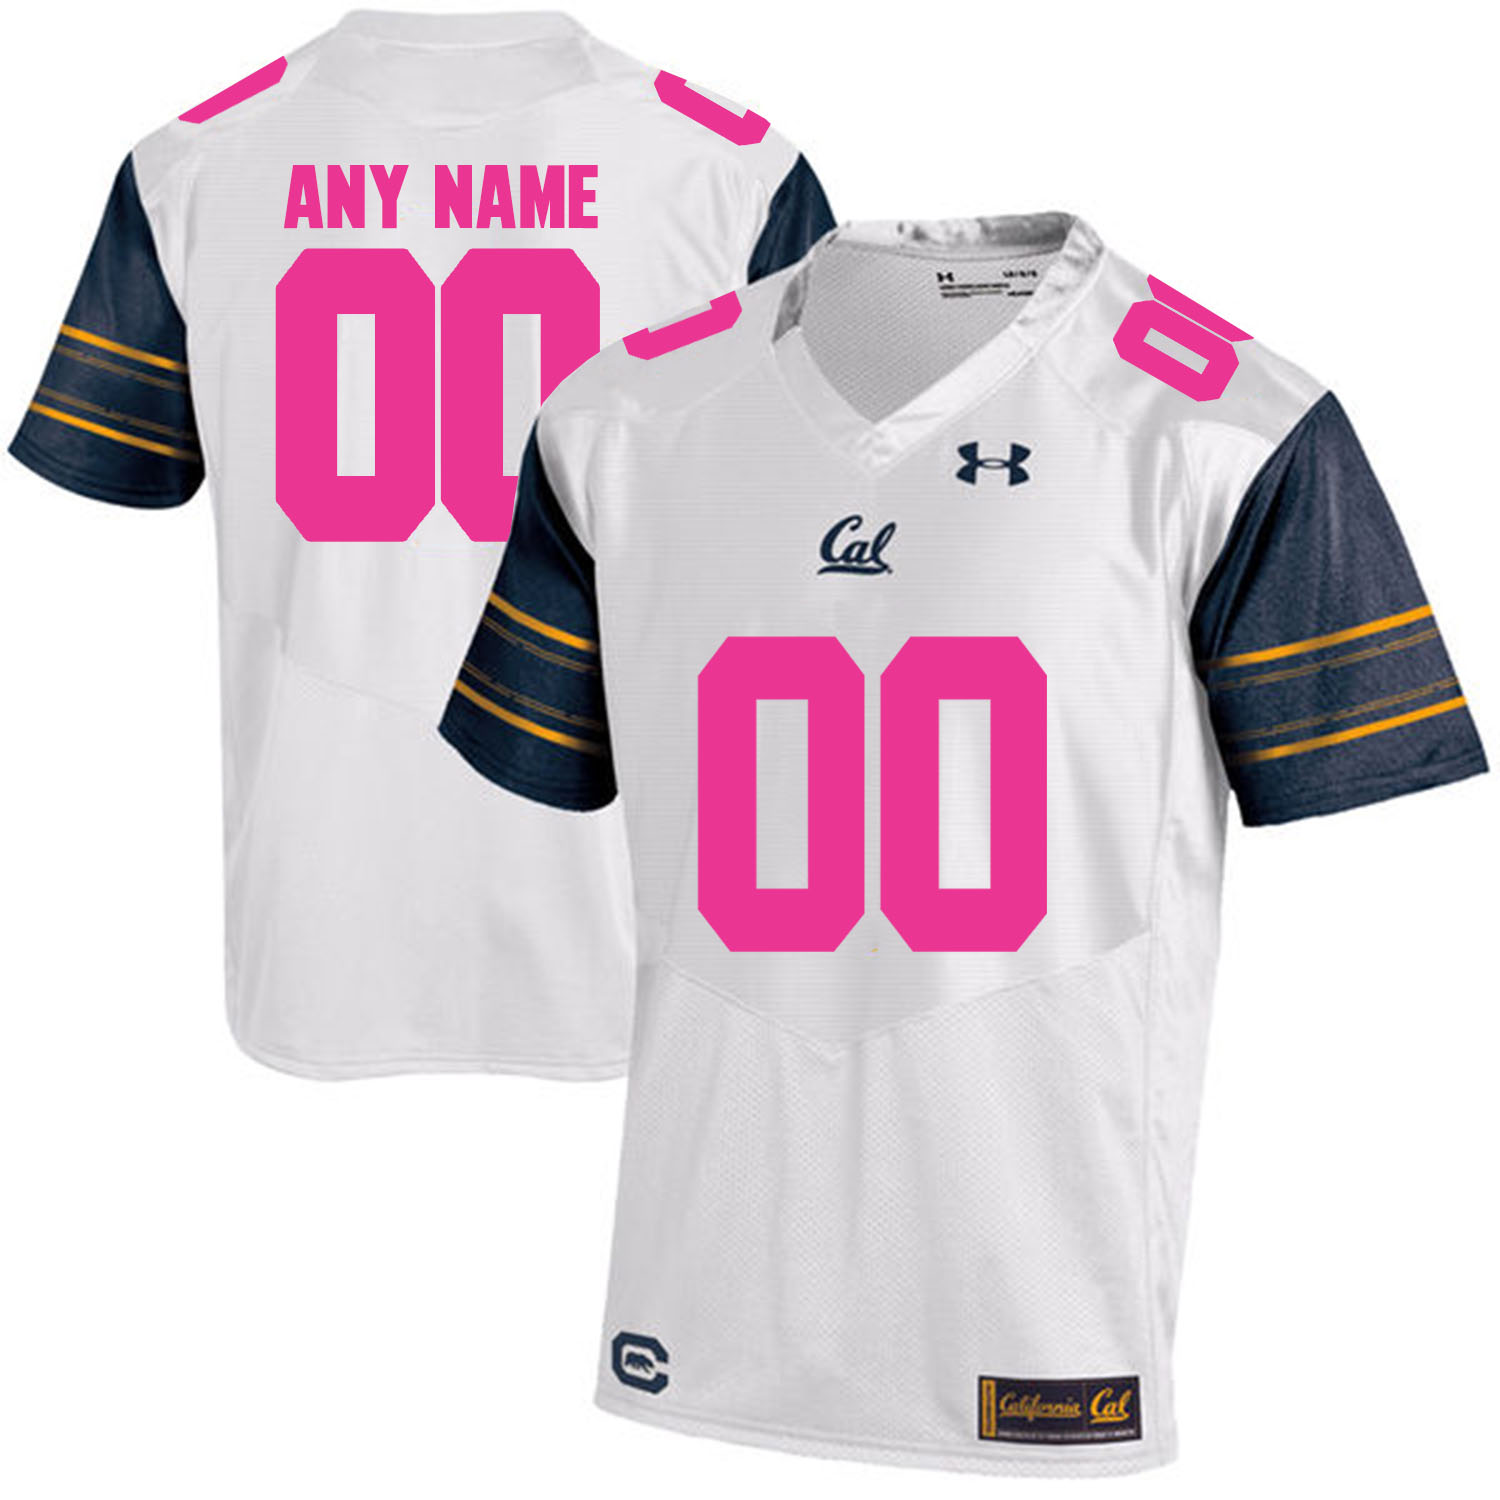 California Golden Bears White Men's Customized 2018 Breast Cancer Awareness College Football Jersey